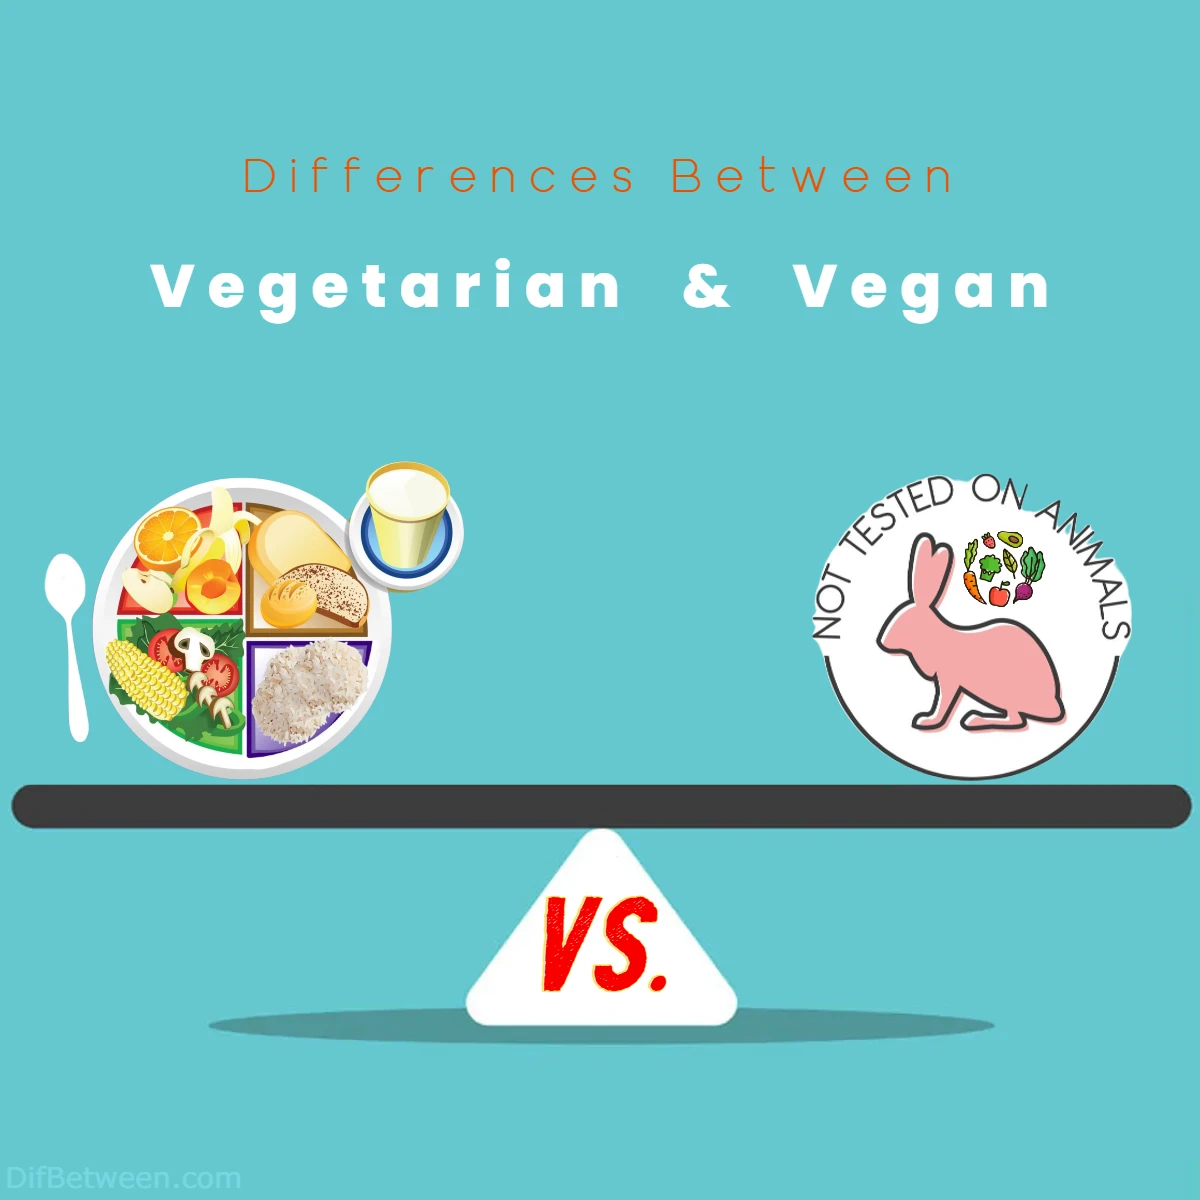 Differences Between Vegetarian vs Vegan